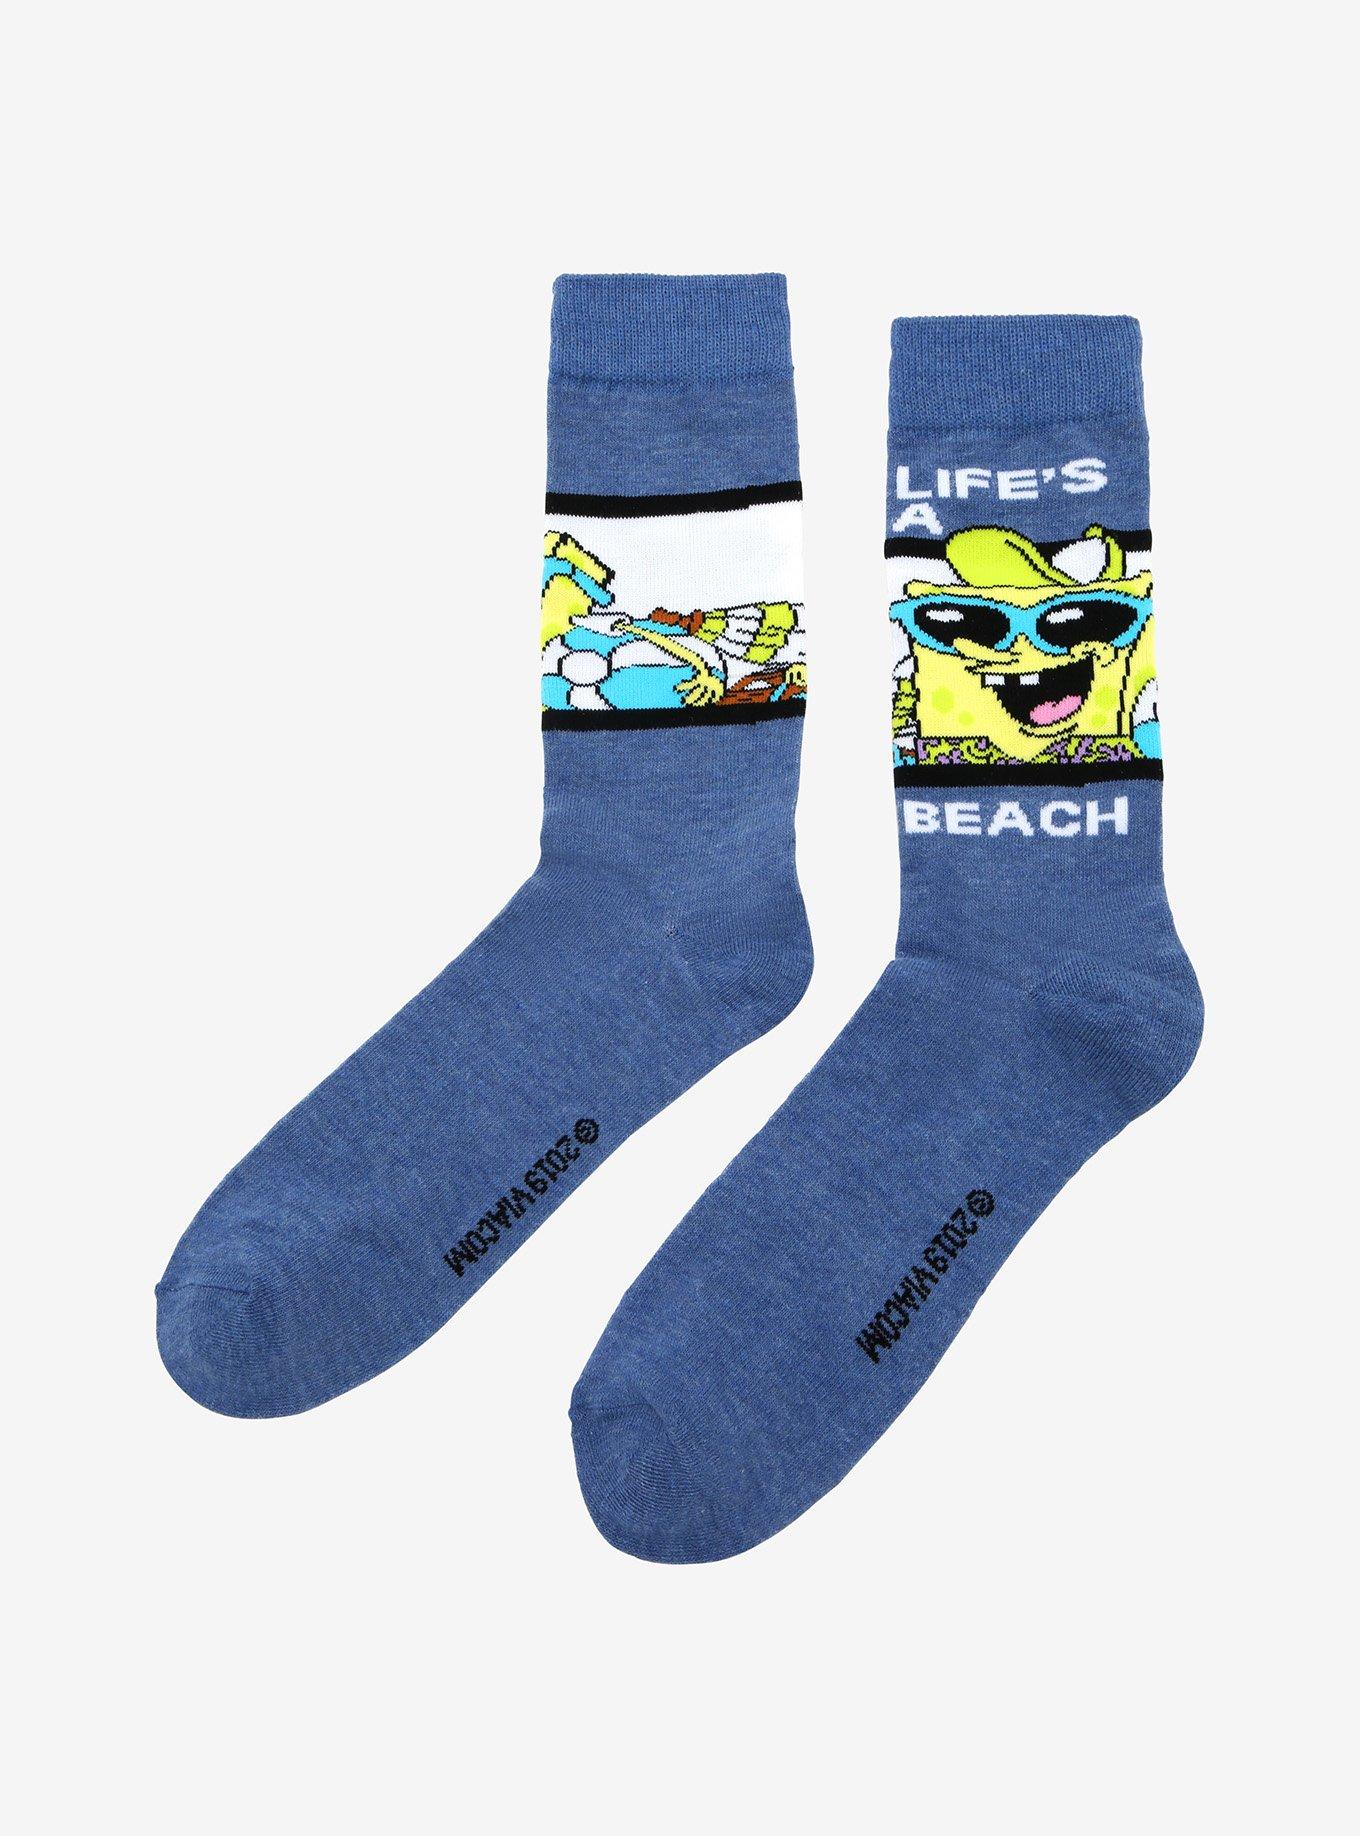 SpongeBob SquarePants Life's A Beach Crew Socks, , alternate